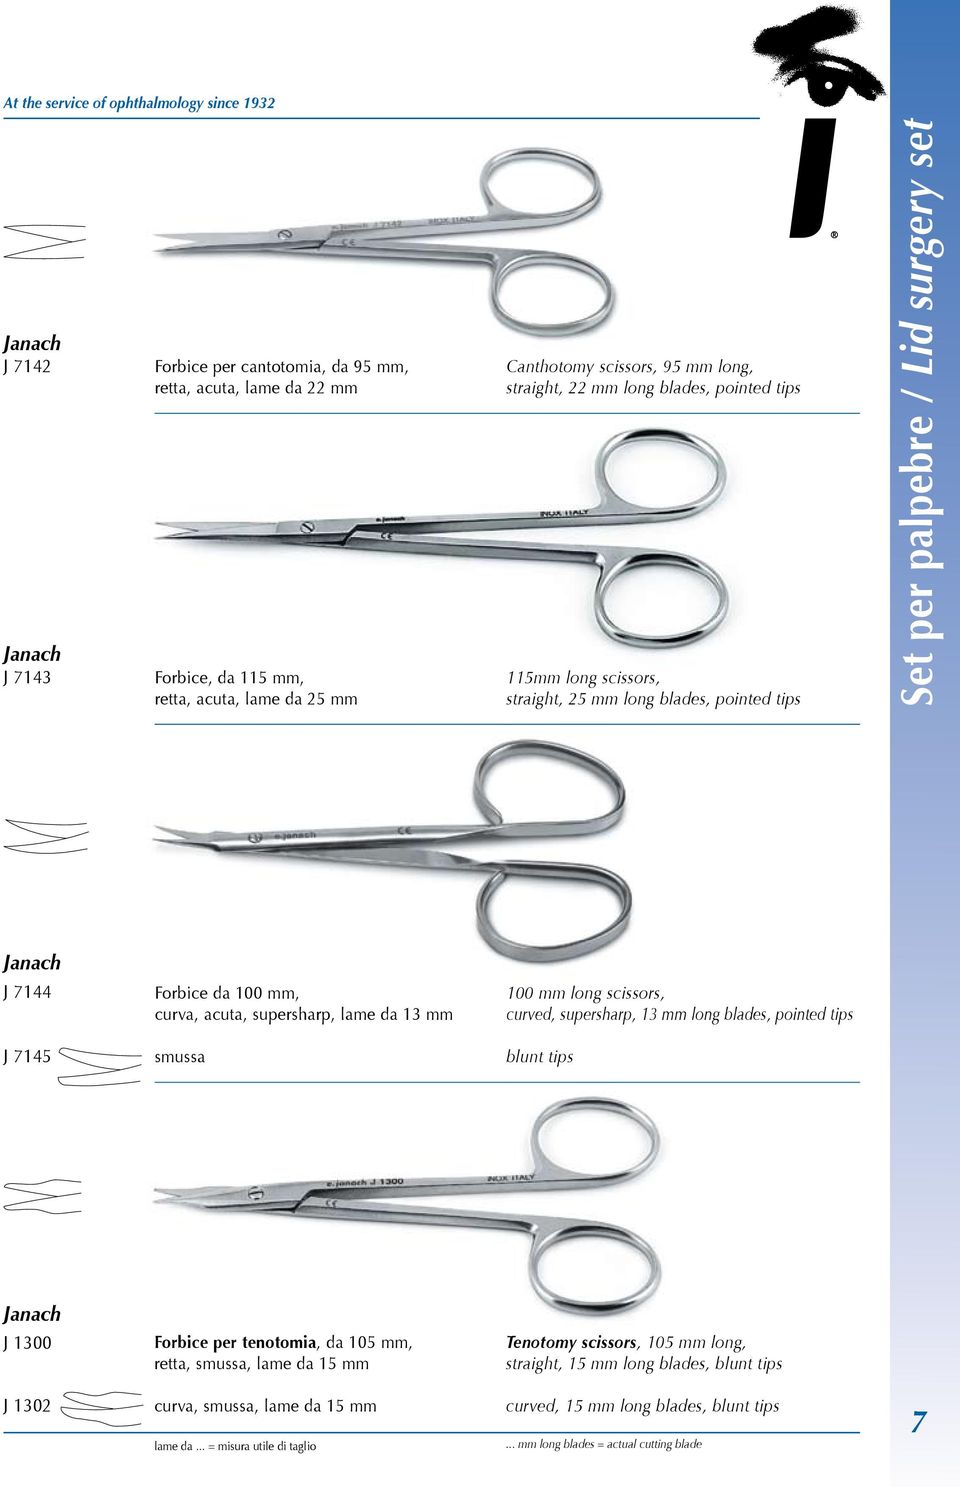 13 mm 100 mm long scissors, curved, supersharp, 13 mm long blades, pointed tips J 7145 smussa blunt tips J 1300 Forbice per tenotomia, da 105 mm, retta, smussa, lame da 15 mm Tenotomy scissors, 105